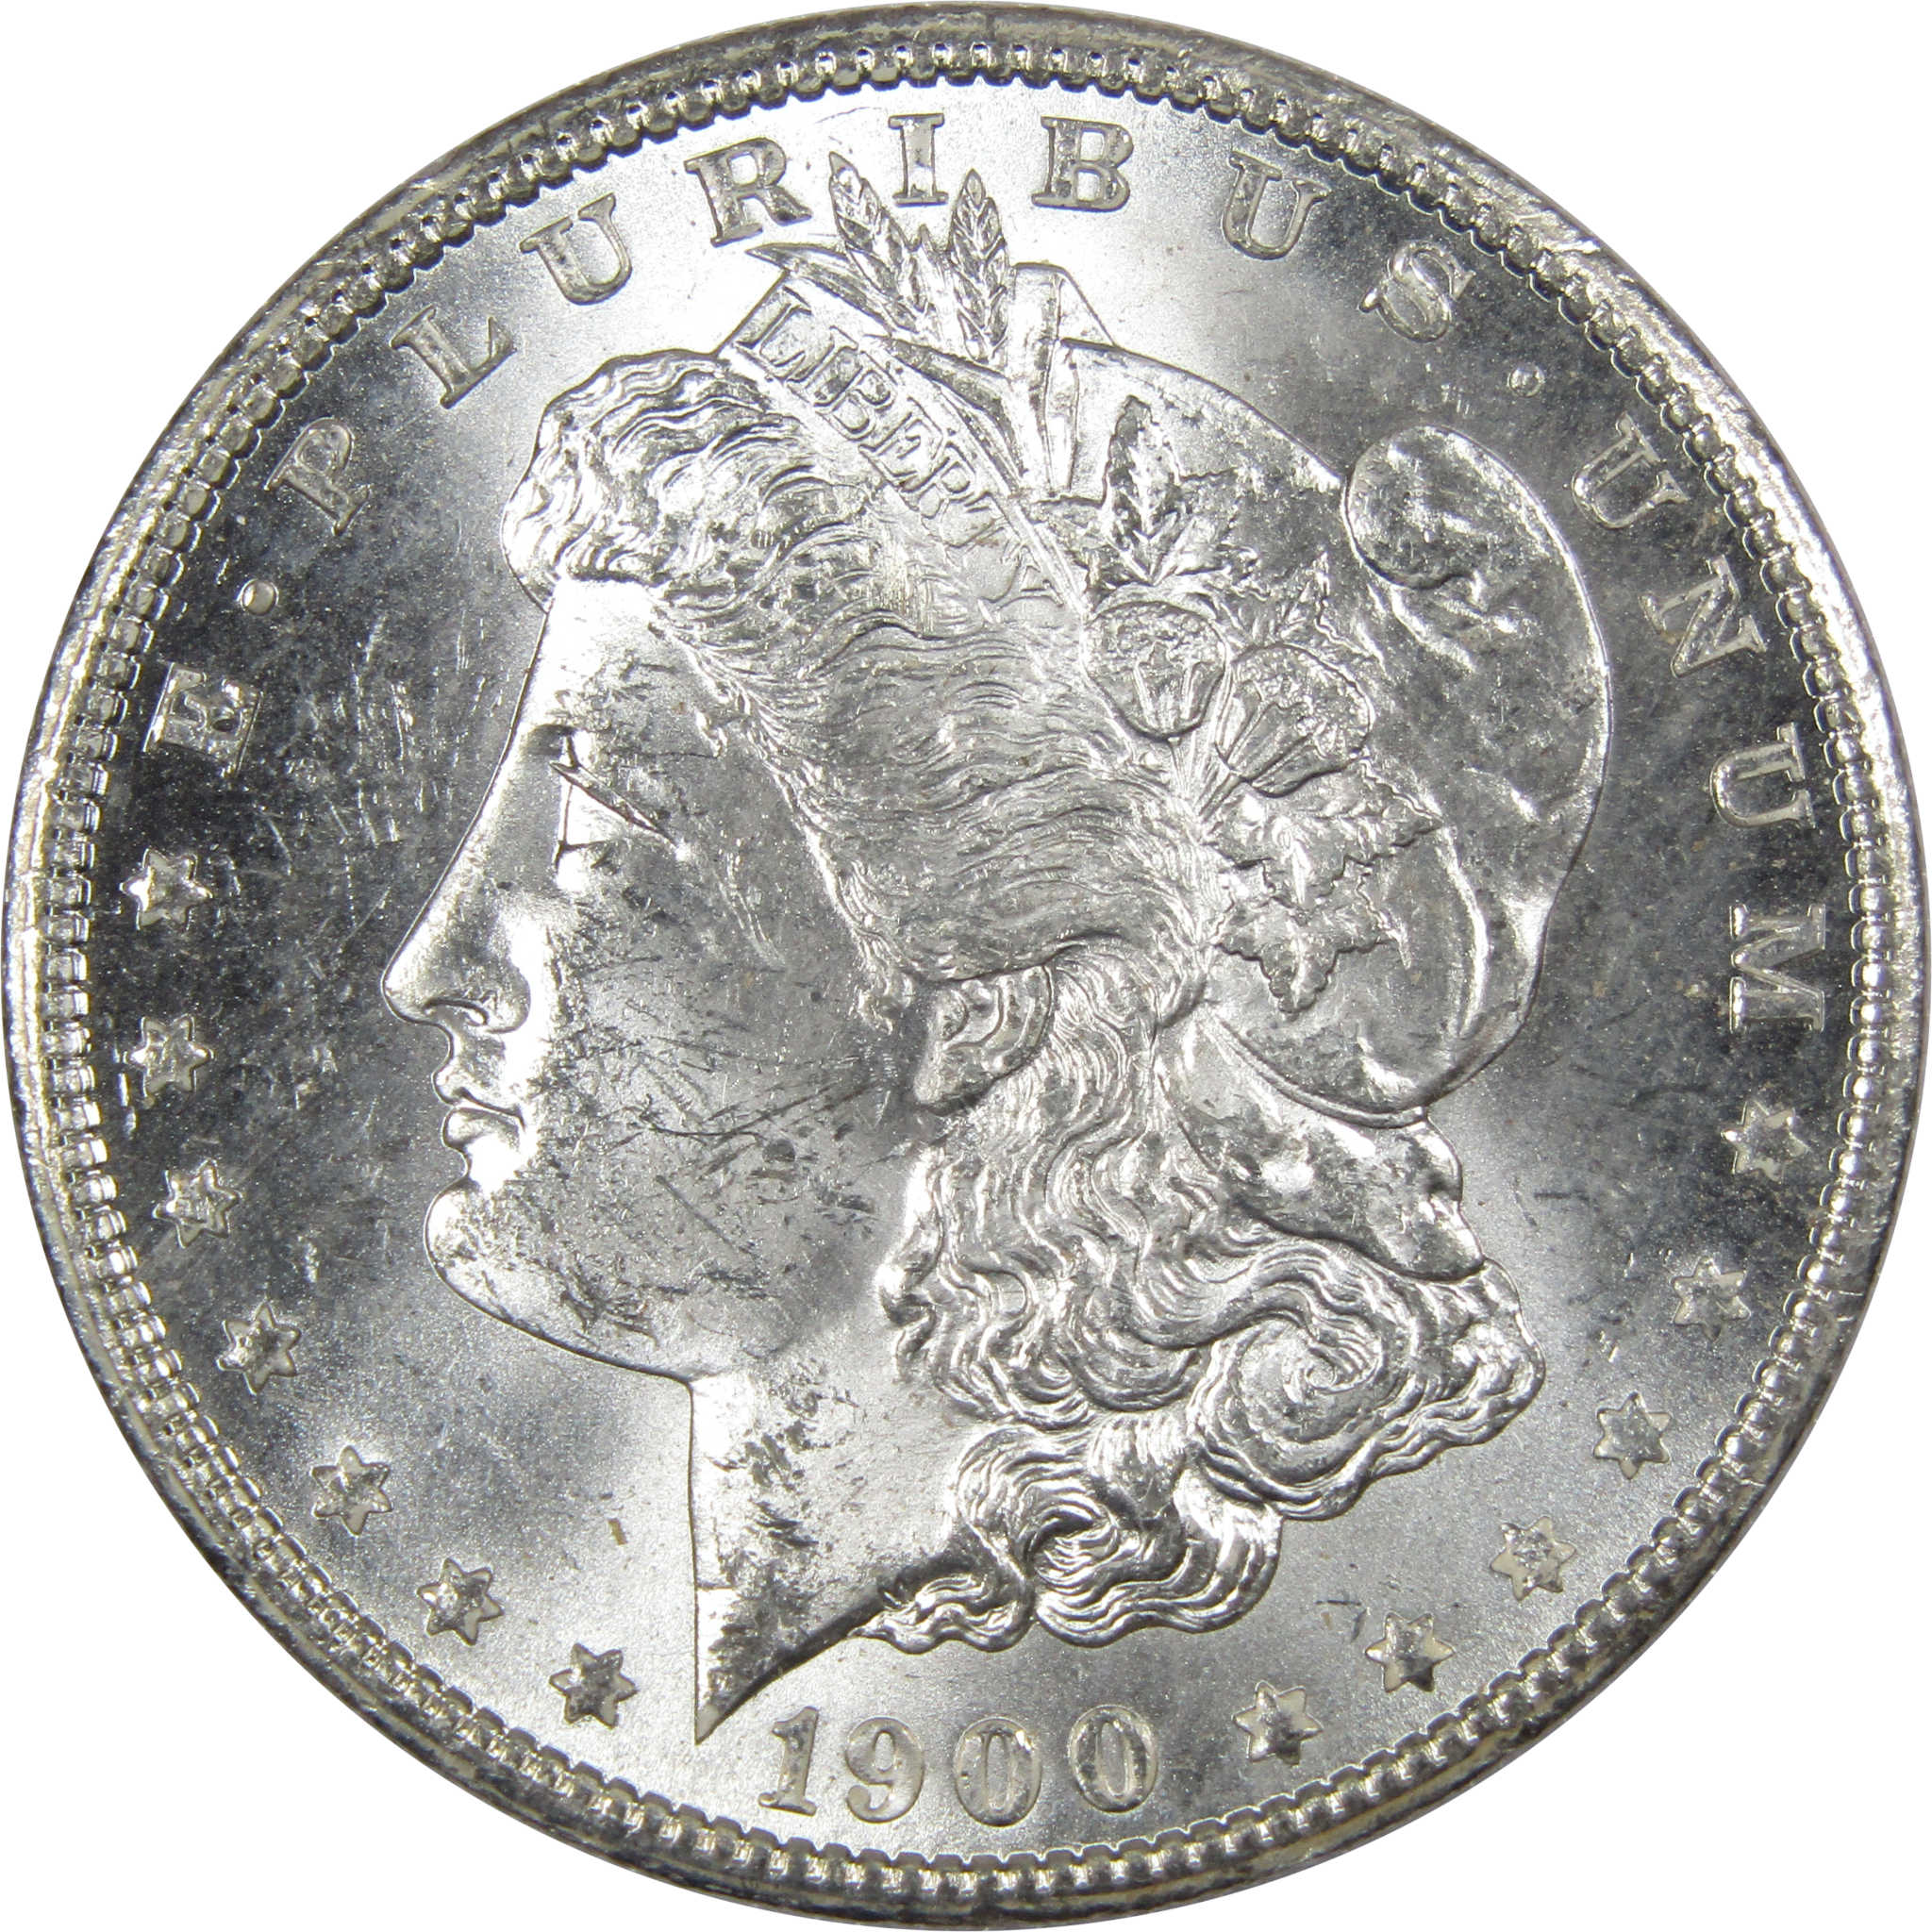 1900 O Morgan Dollar BU Uncirculated Mint State 90% Silver SKU:IPC9739 - Morgan coin - Morgan silver dollar - Morgan silver dollar for sale - Profile Coins &amp; Collectibles